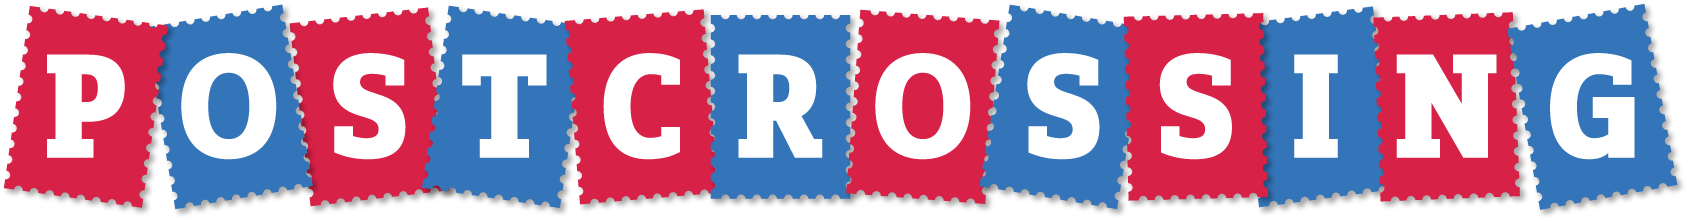 Postcrossing Main Logo